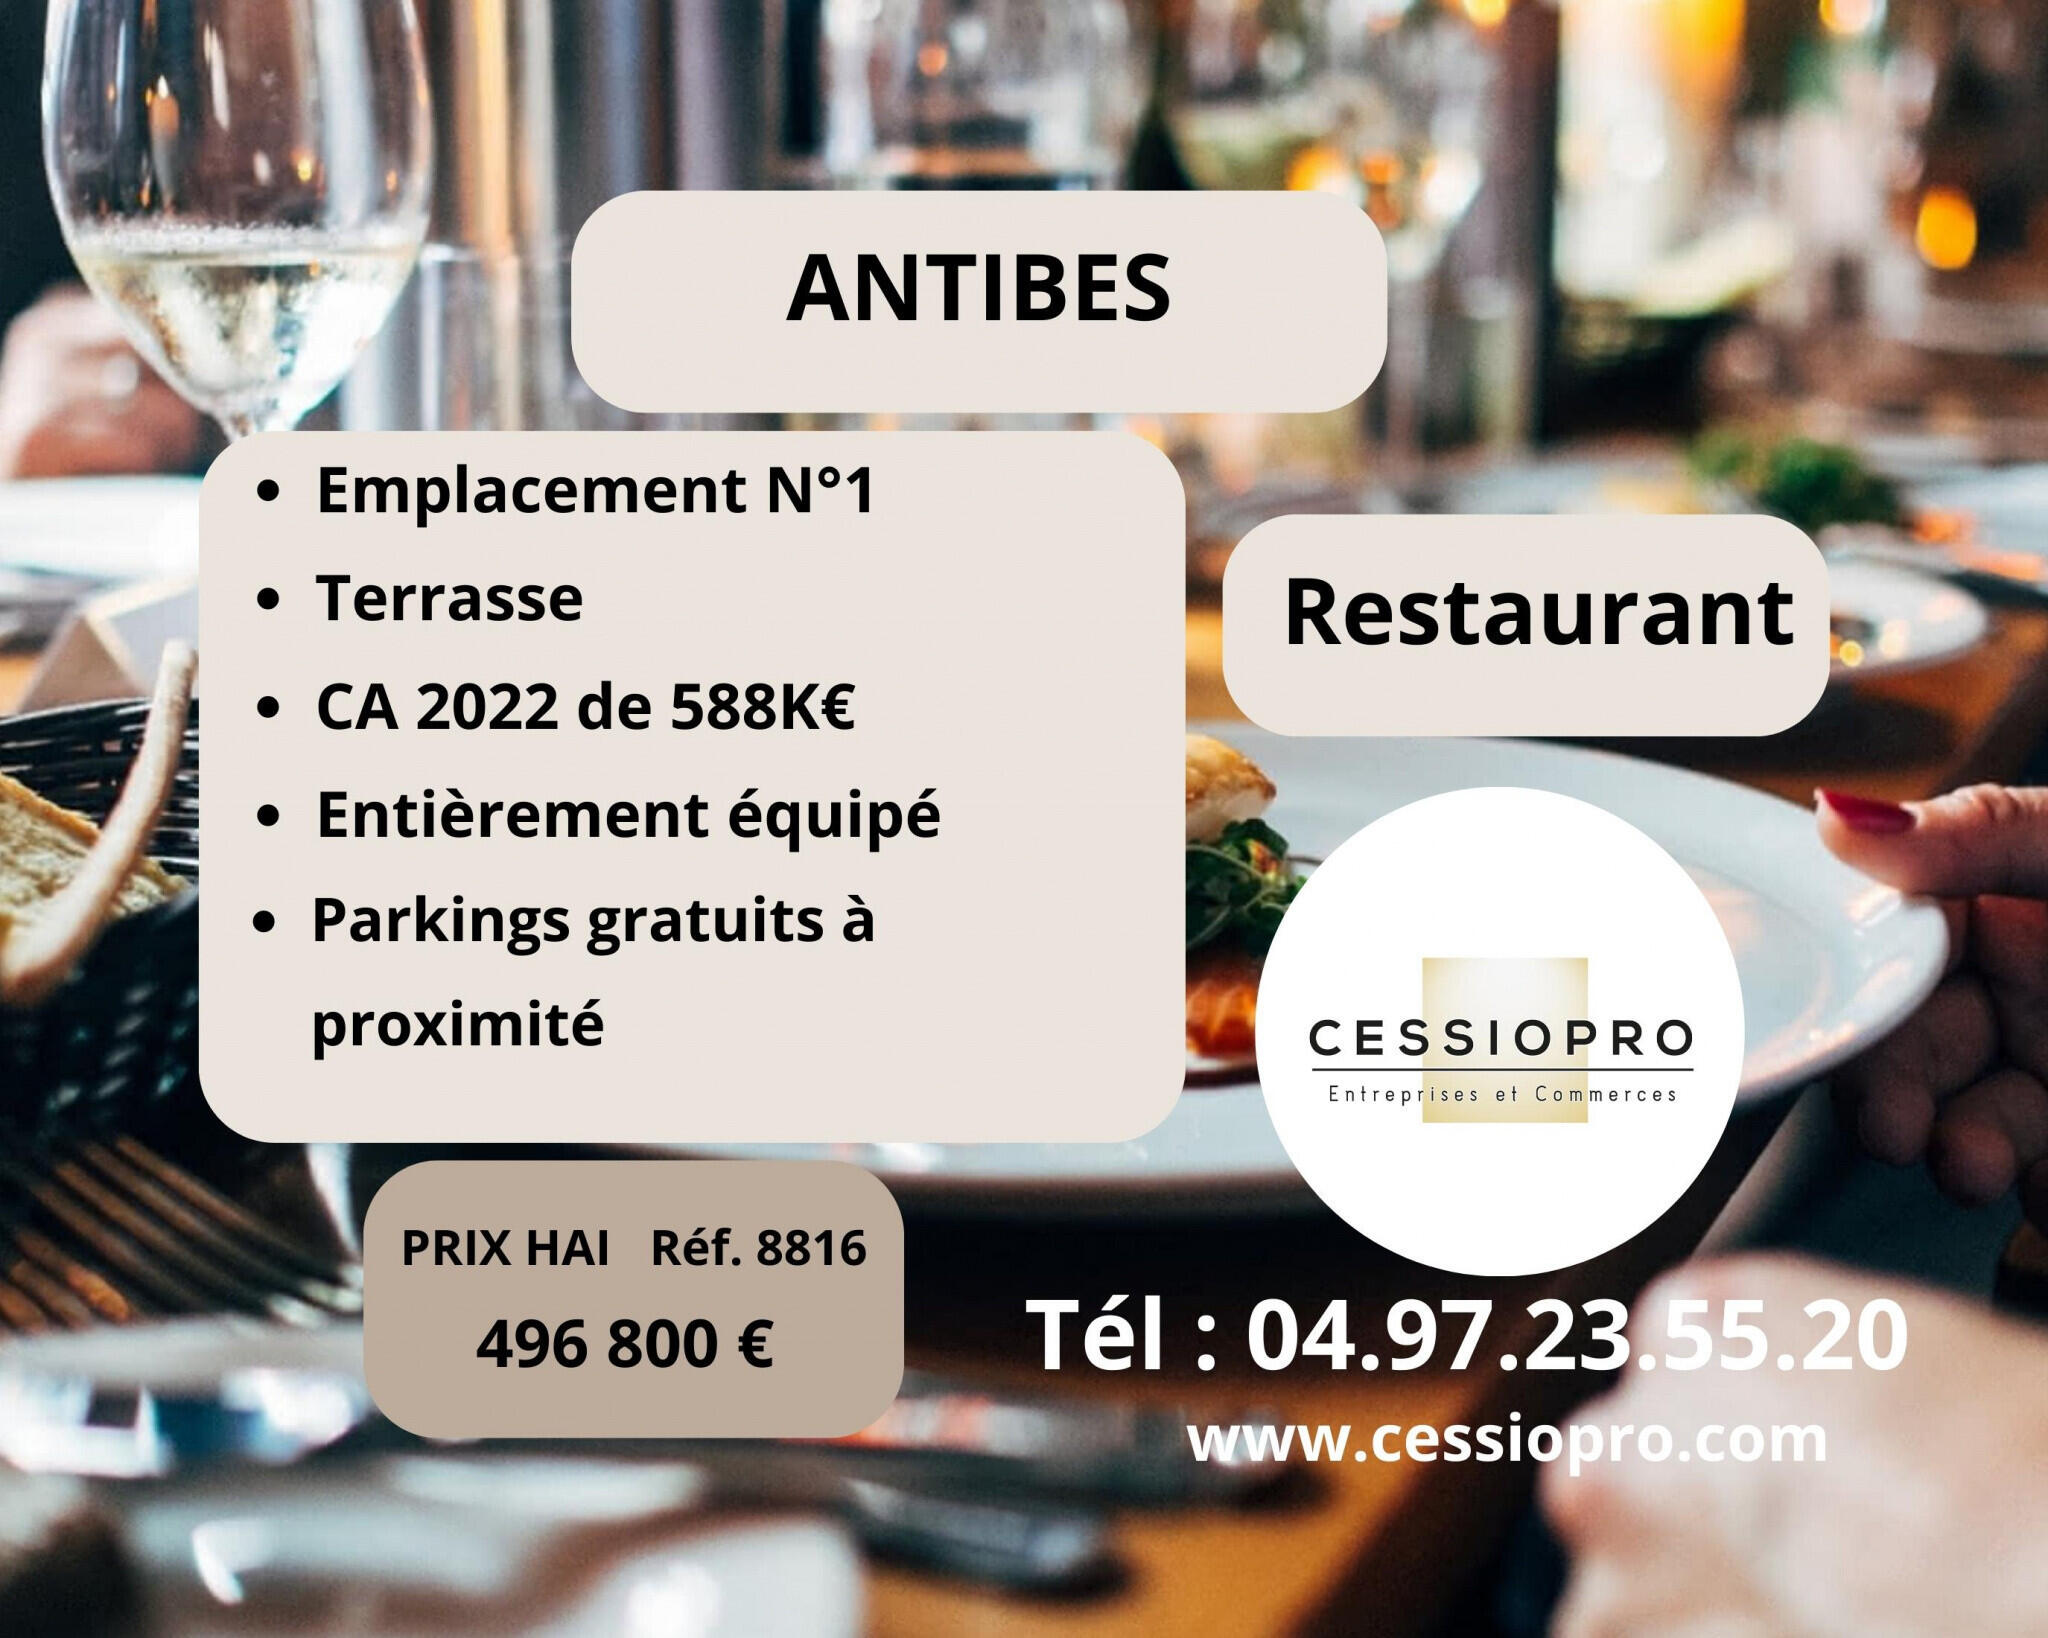 A vendre restaurant terrasse empl N°1 Antibes